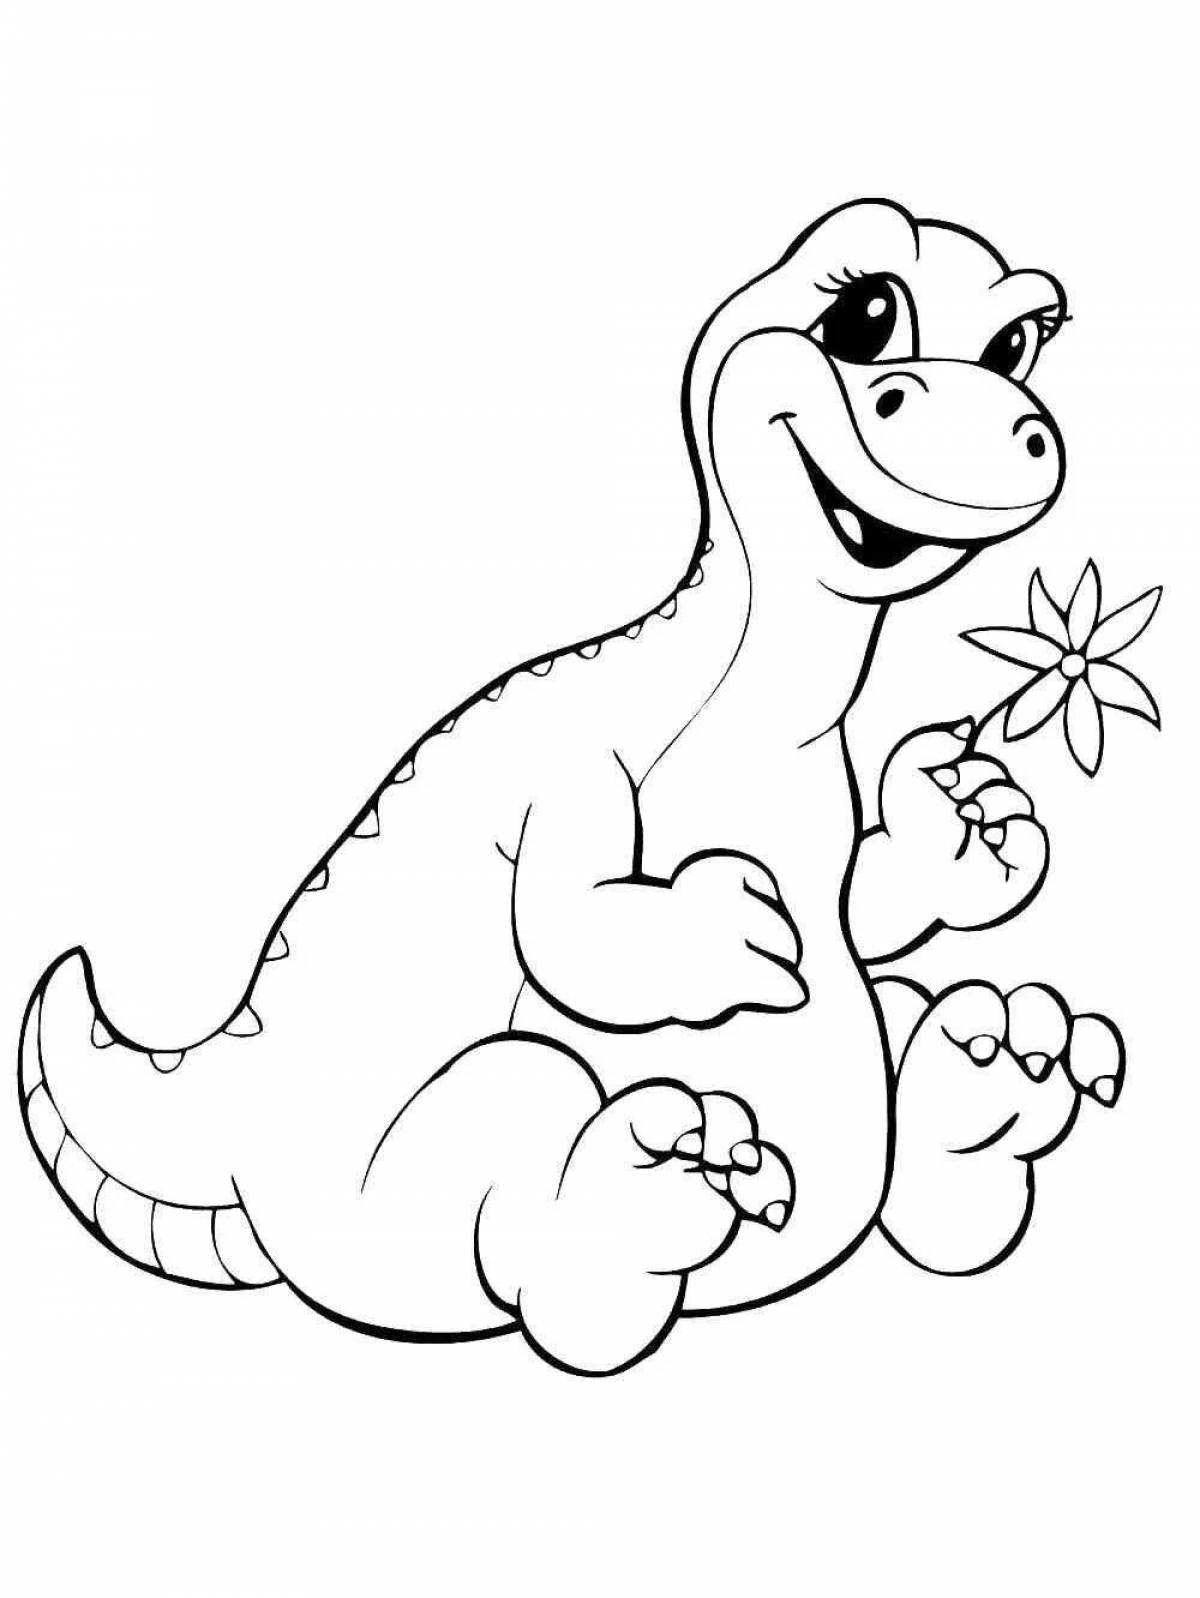 Динозавры раскраска а4. Динозавры / раскраска. Раскраска "Динозаврики". Динозавр раскраска для детей. Раскраска Динозаврики для малышей.